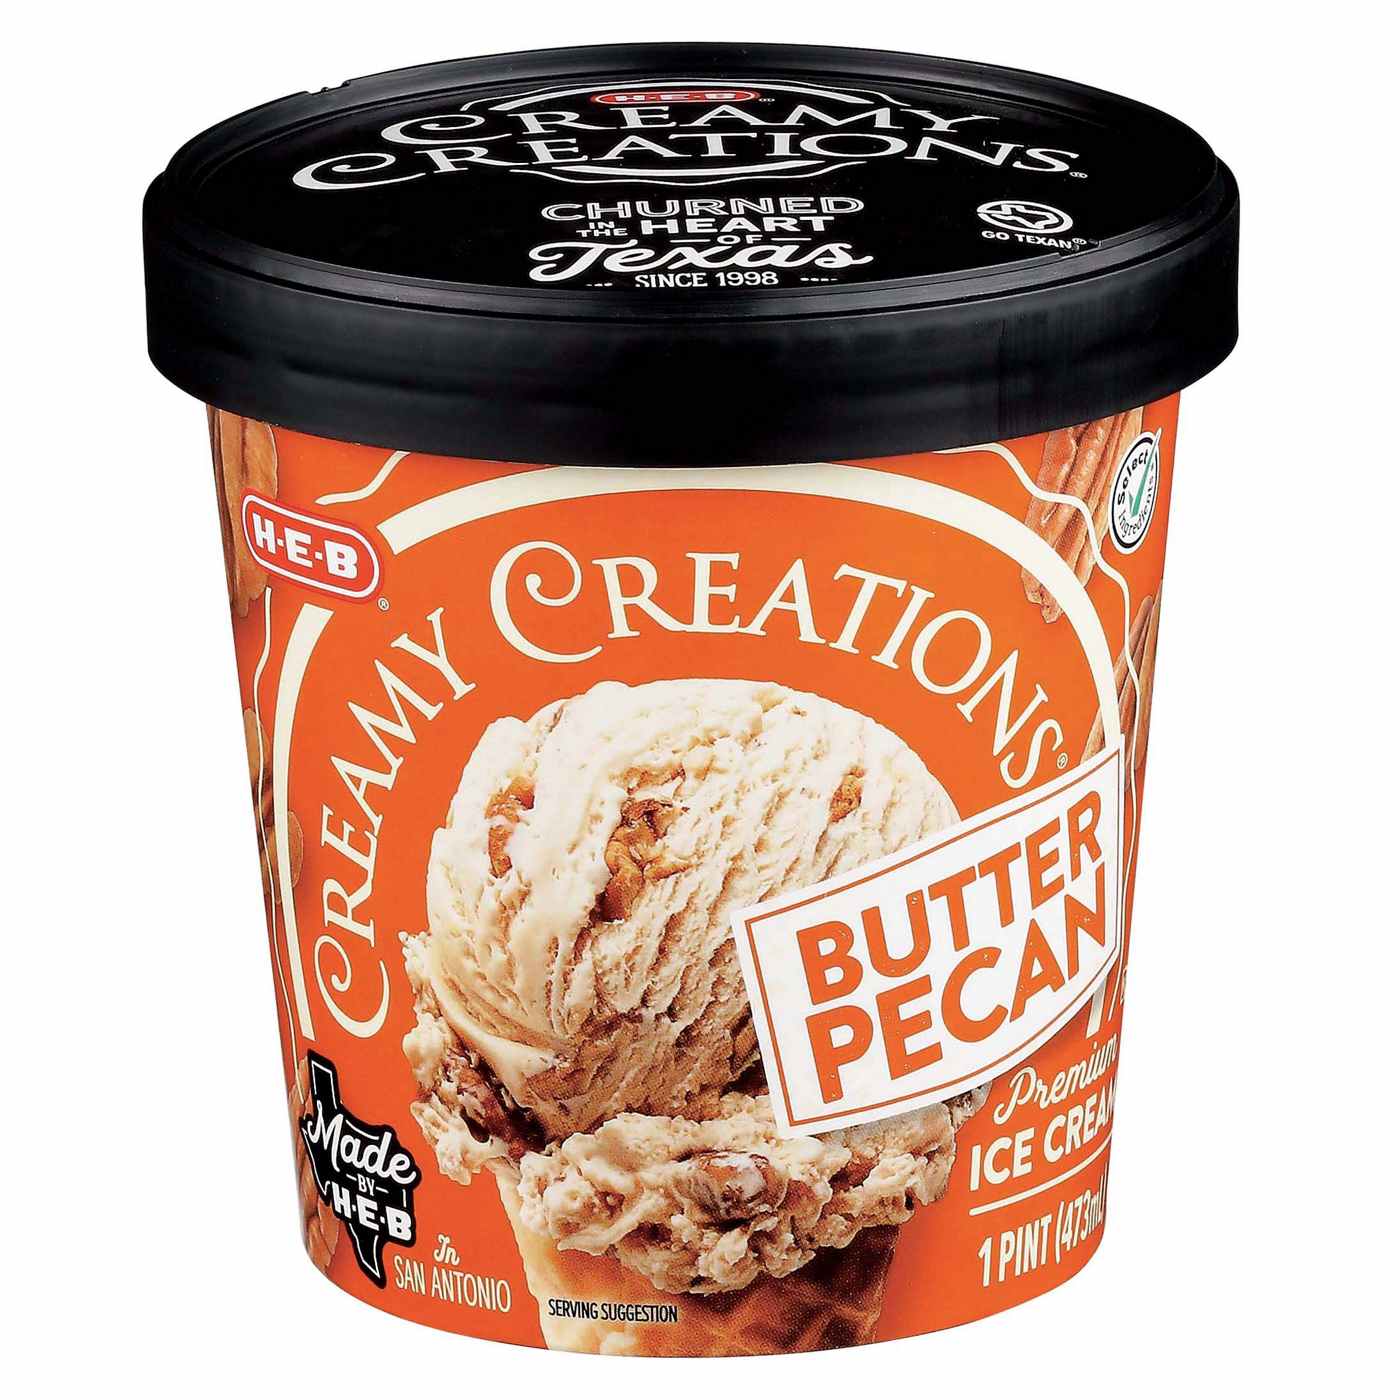 H-E-B Creamy Creations Butter Pecan Ice Cream; image 1 of 2